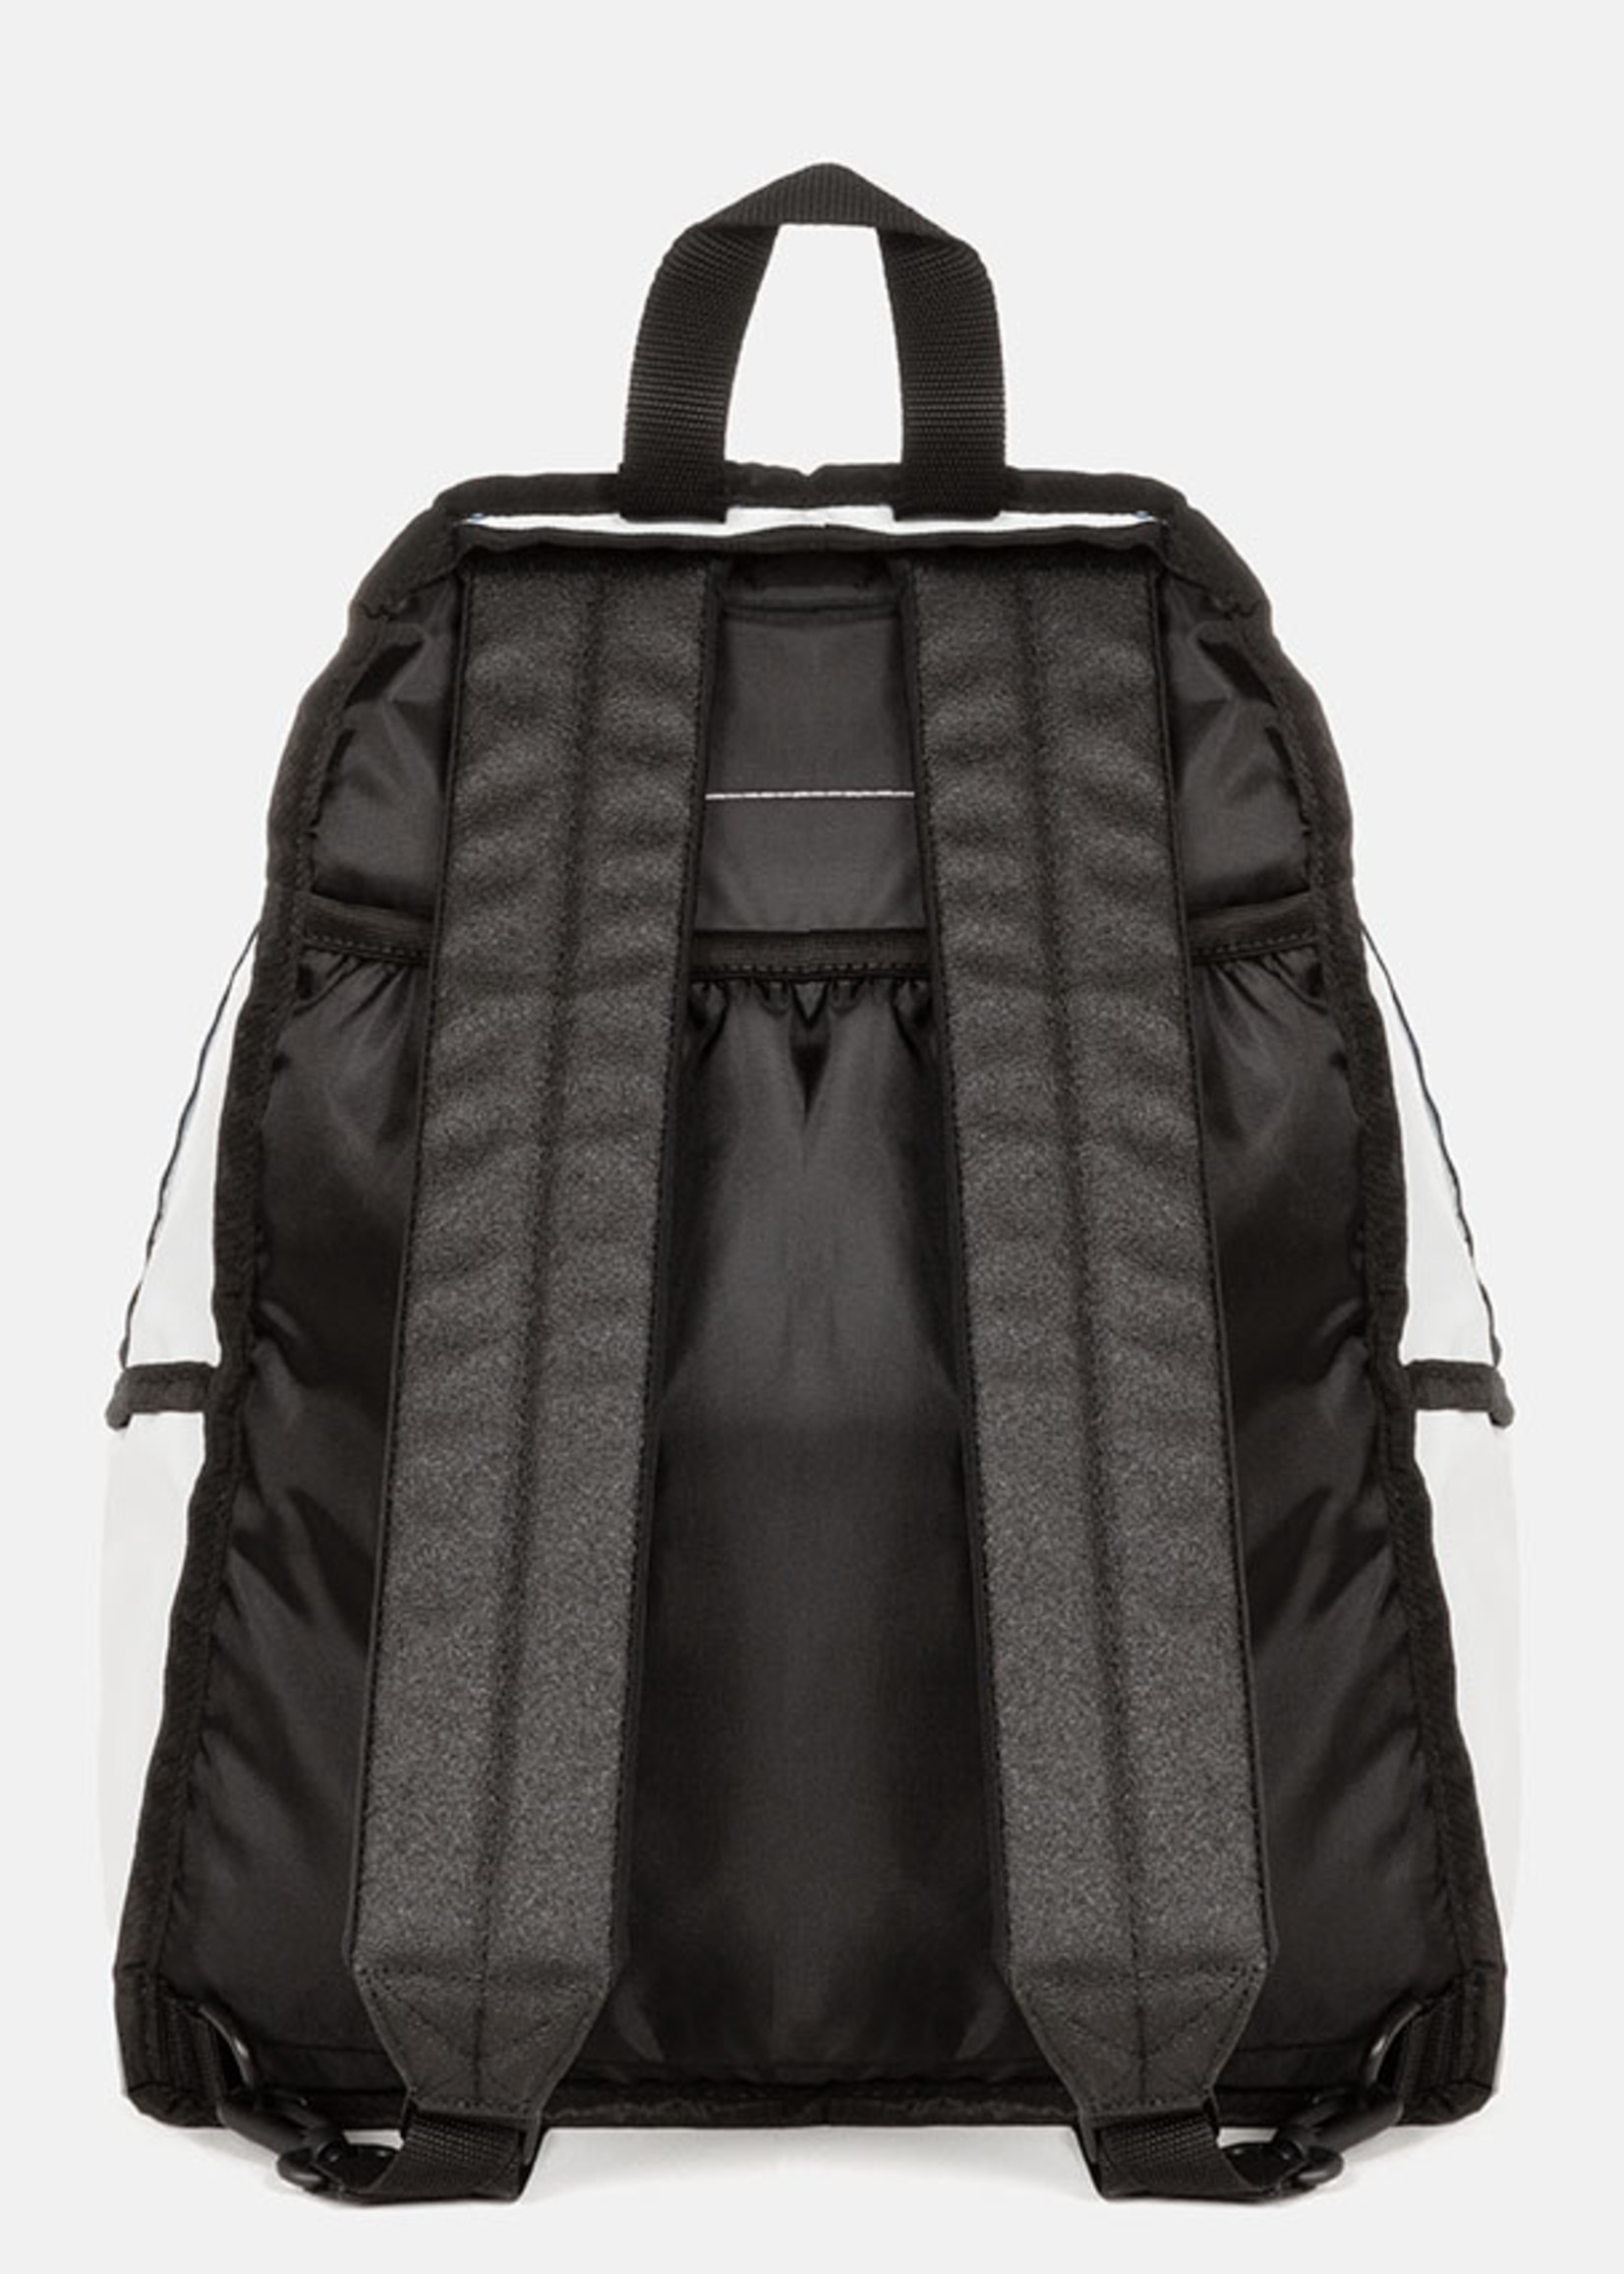 MM6 MAISON MARGIELA MM6 X Eastpak Reversible Backpack in Black and White